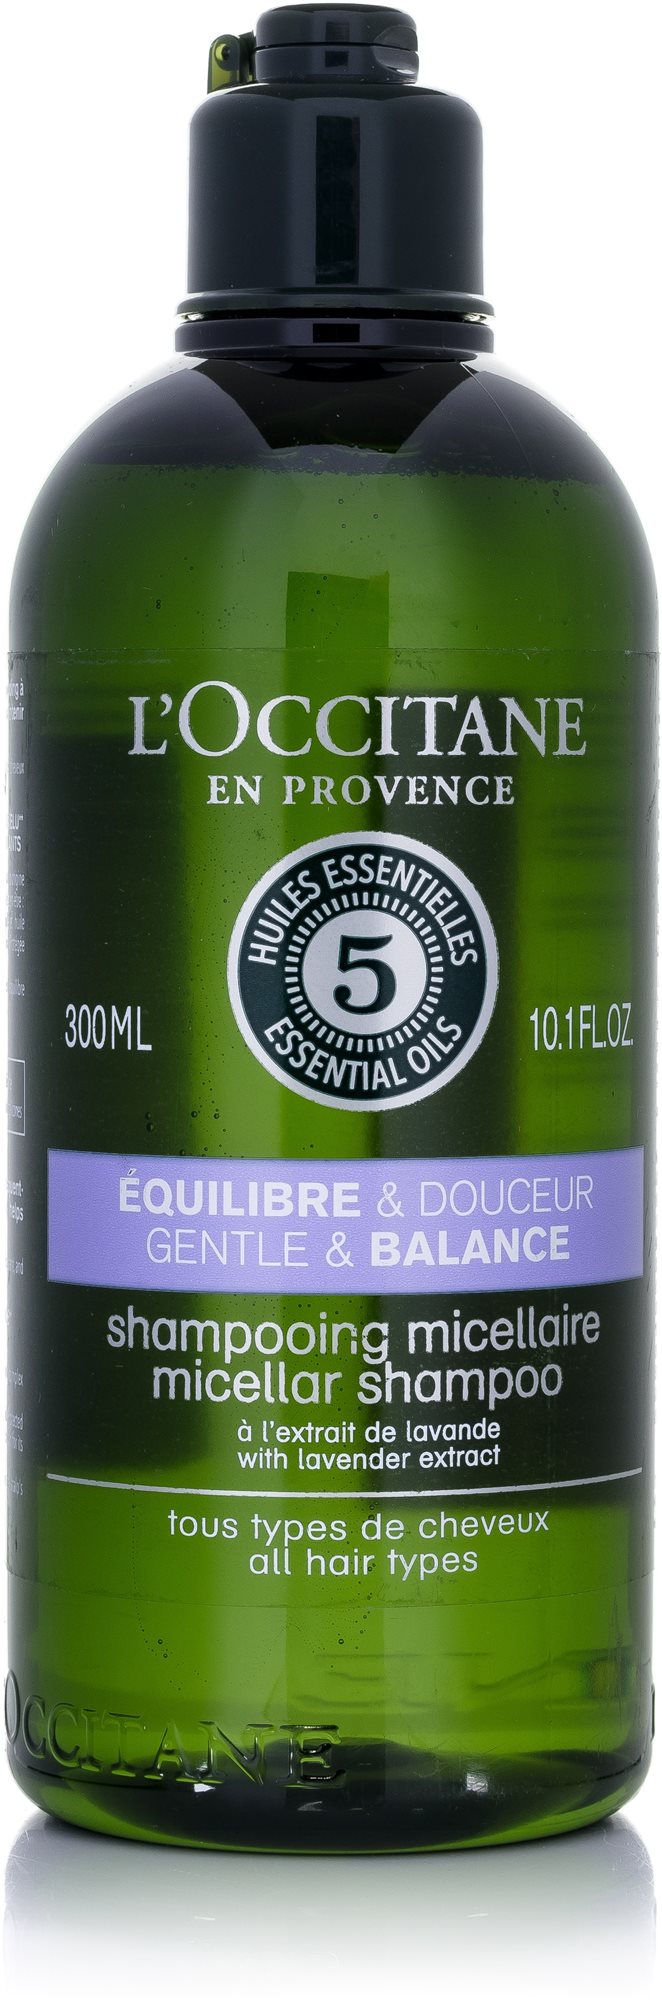 L'OCCITANE Essential Oils Micellar Shampoo 300 ml